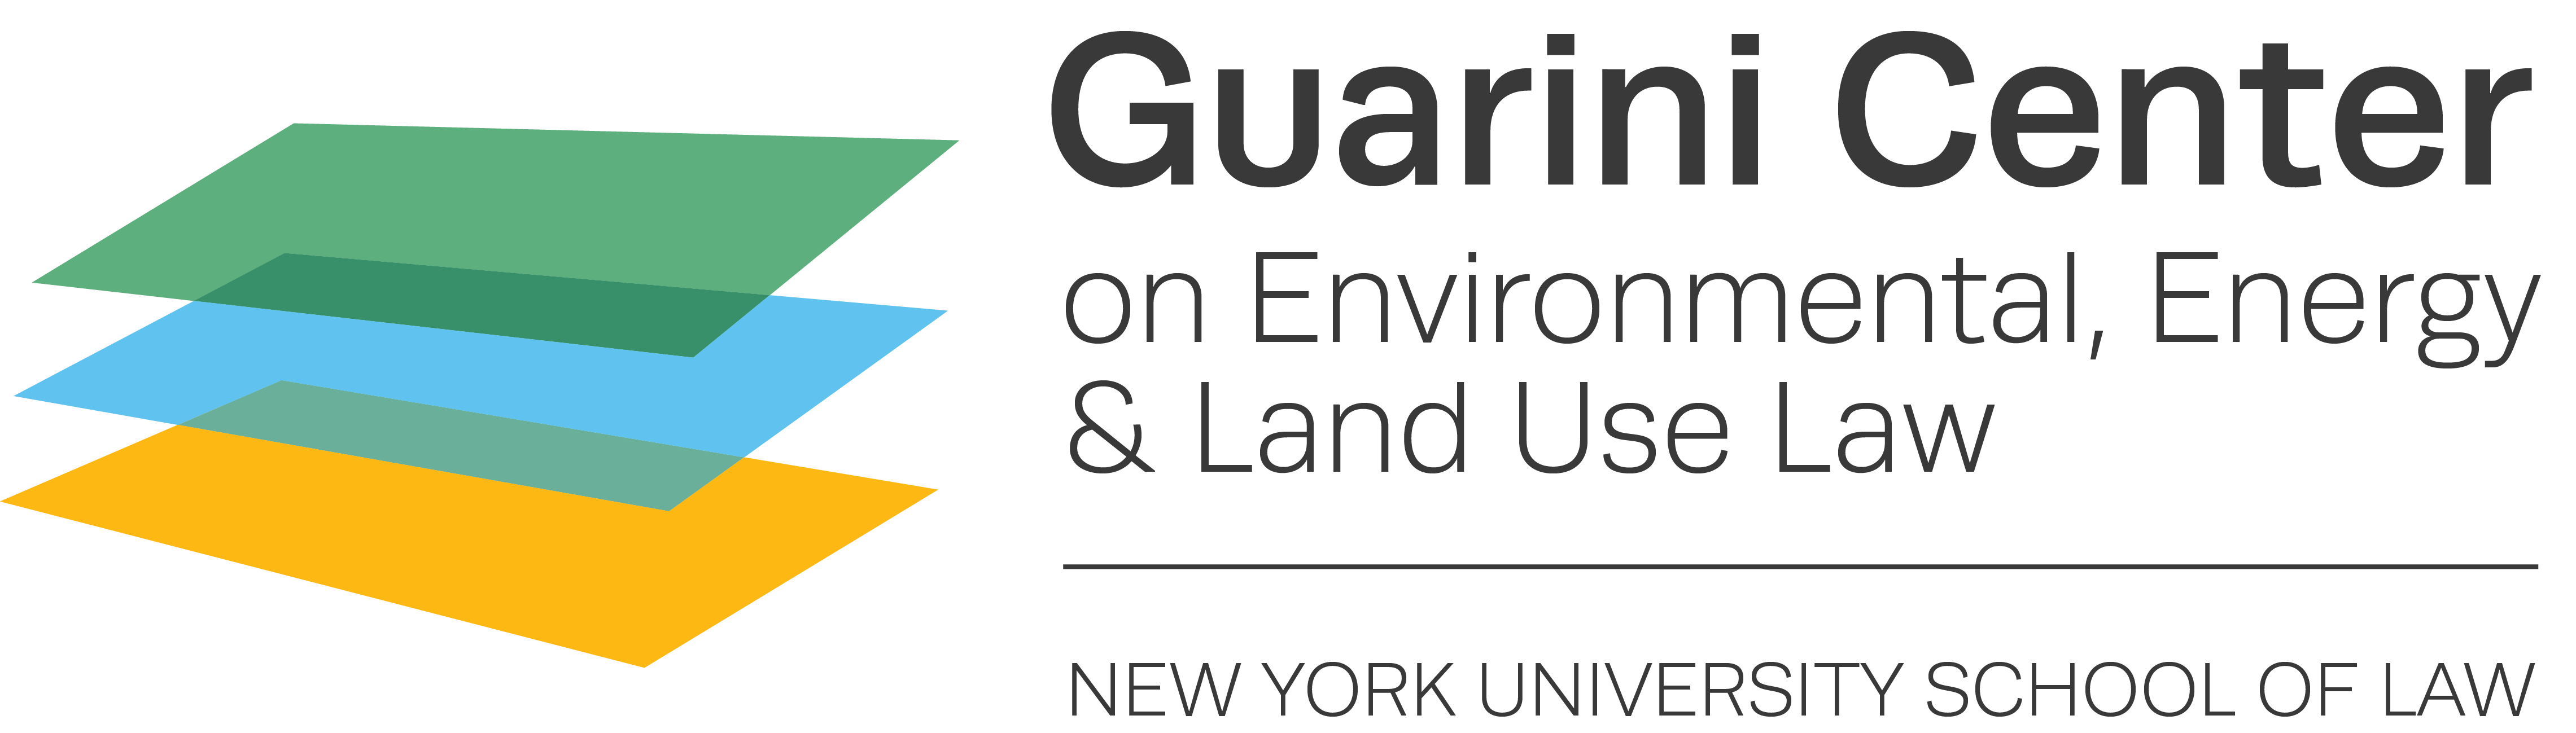 Guarini Center on Environmental, Energy & Land Use Law, NYU School of Law